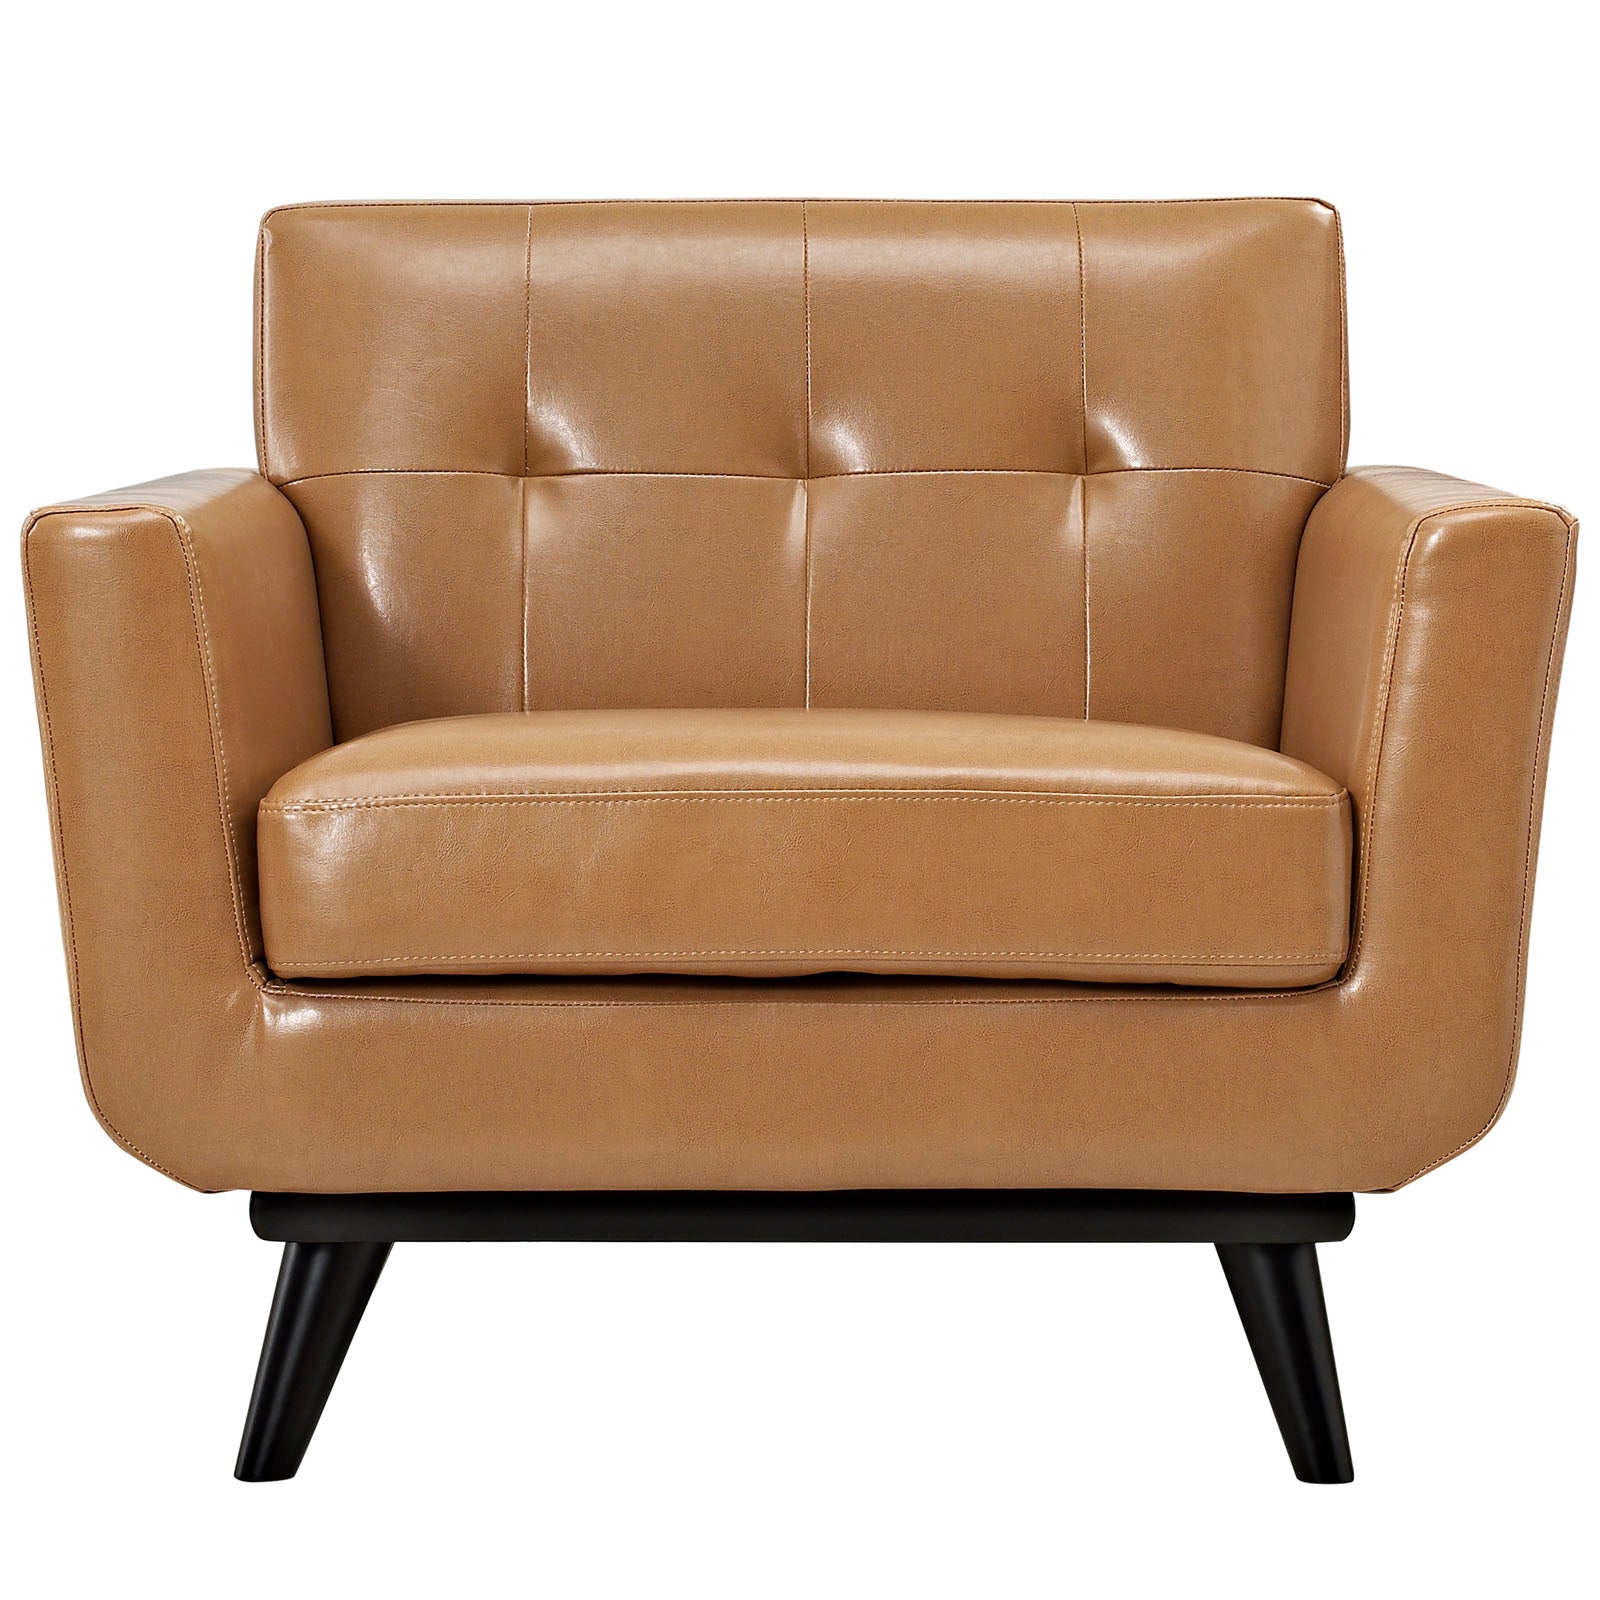 Modway Living Room Sets - Engage Leather Sofa Set Tan